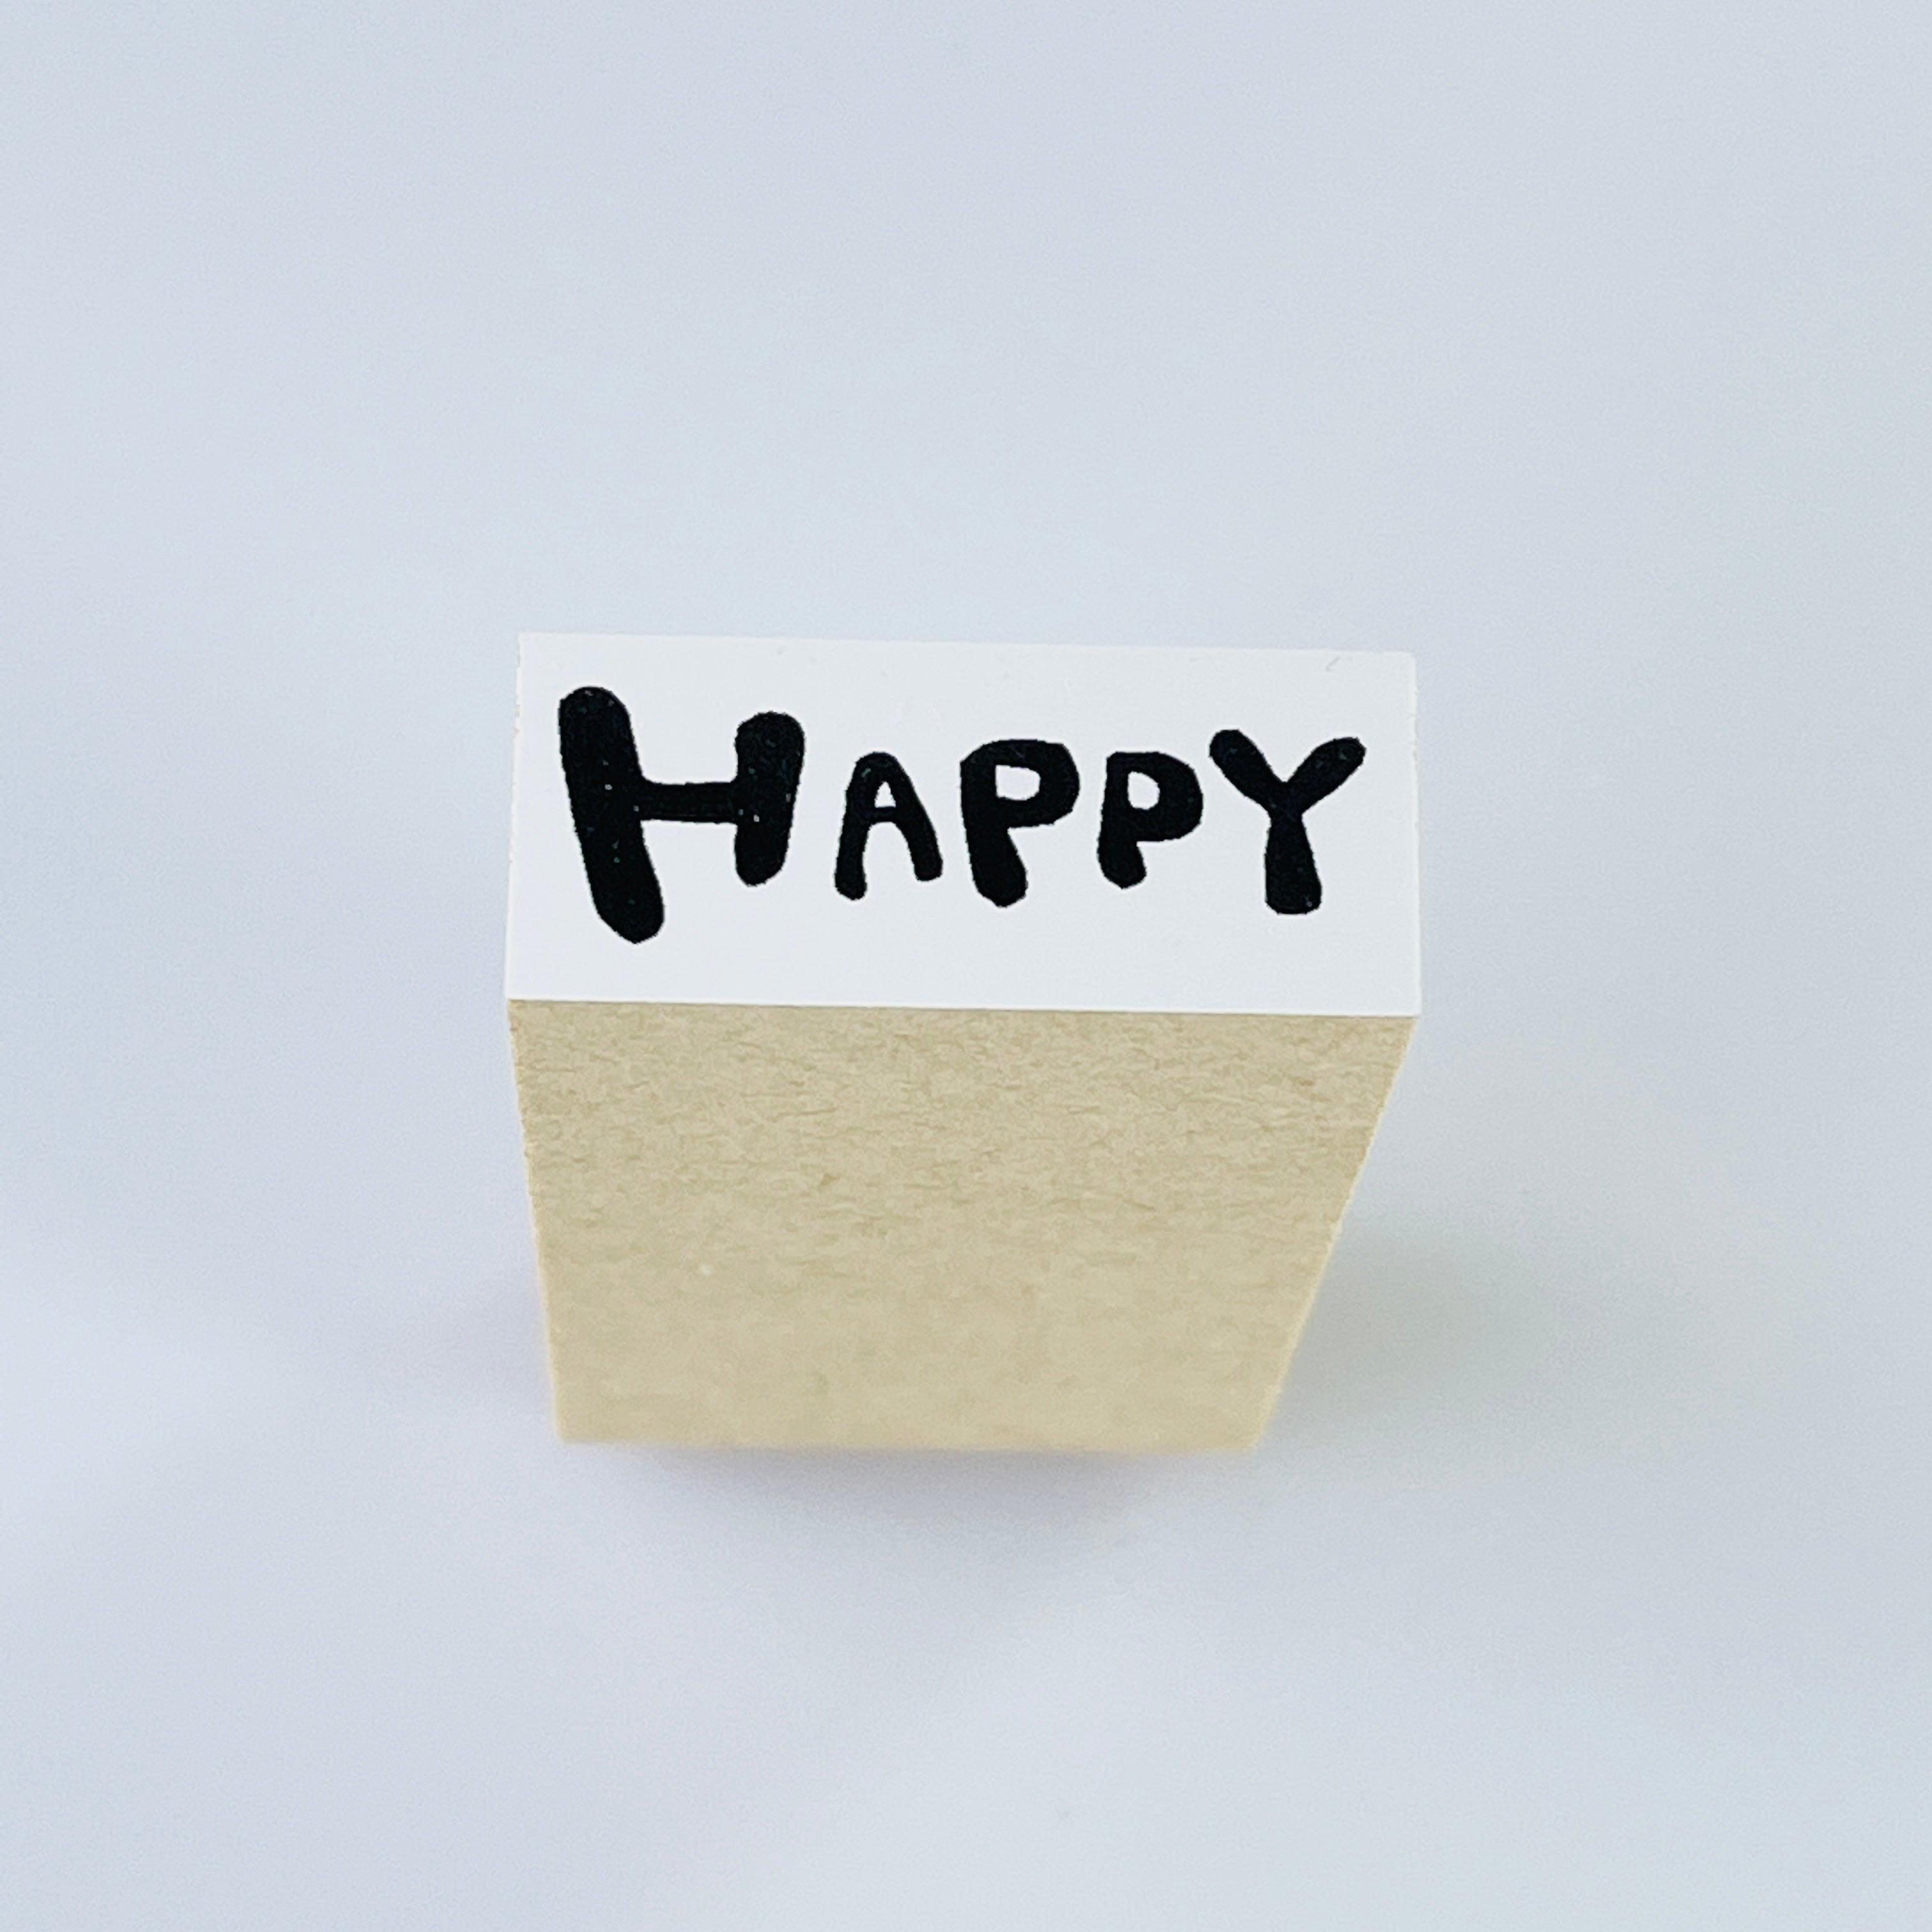 HAPPY (Horizontal Writing)